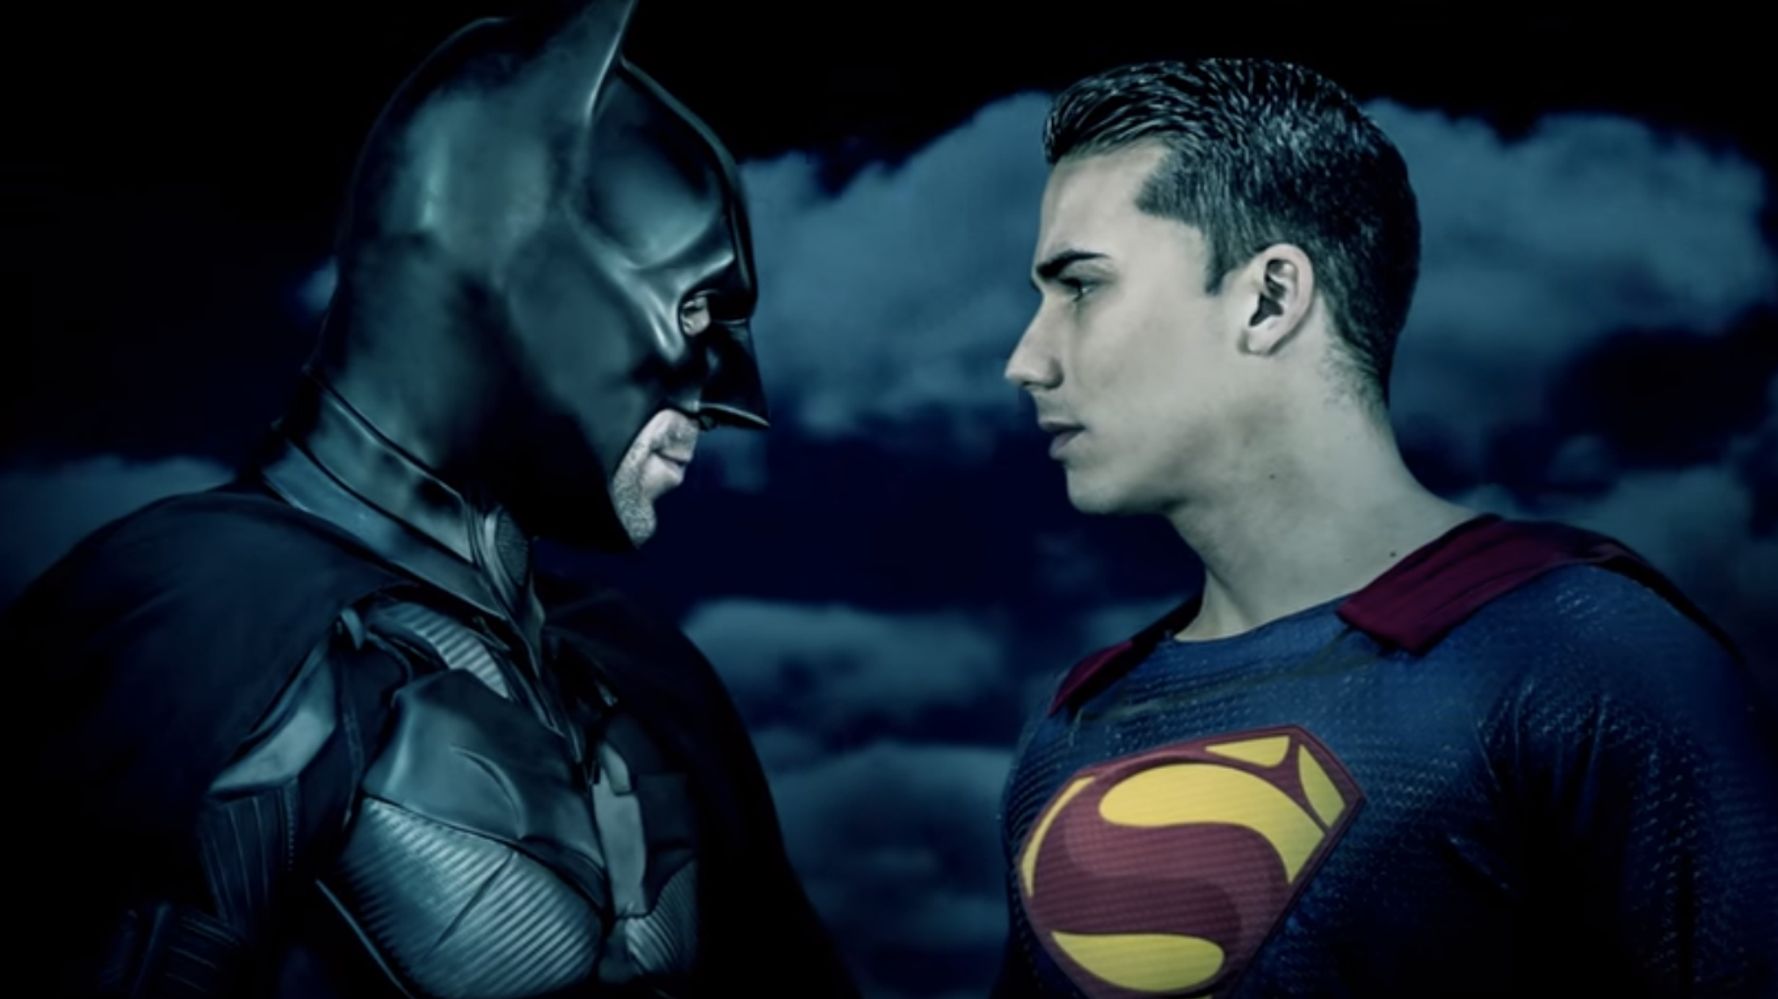 Batman Vs Superman Porn Parody - Here's The 'Batman Vs Superman' Gay Porn Parody You Never ...